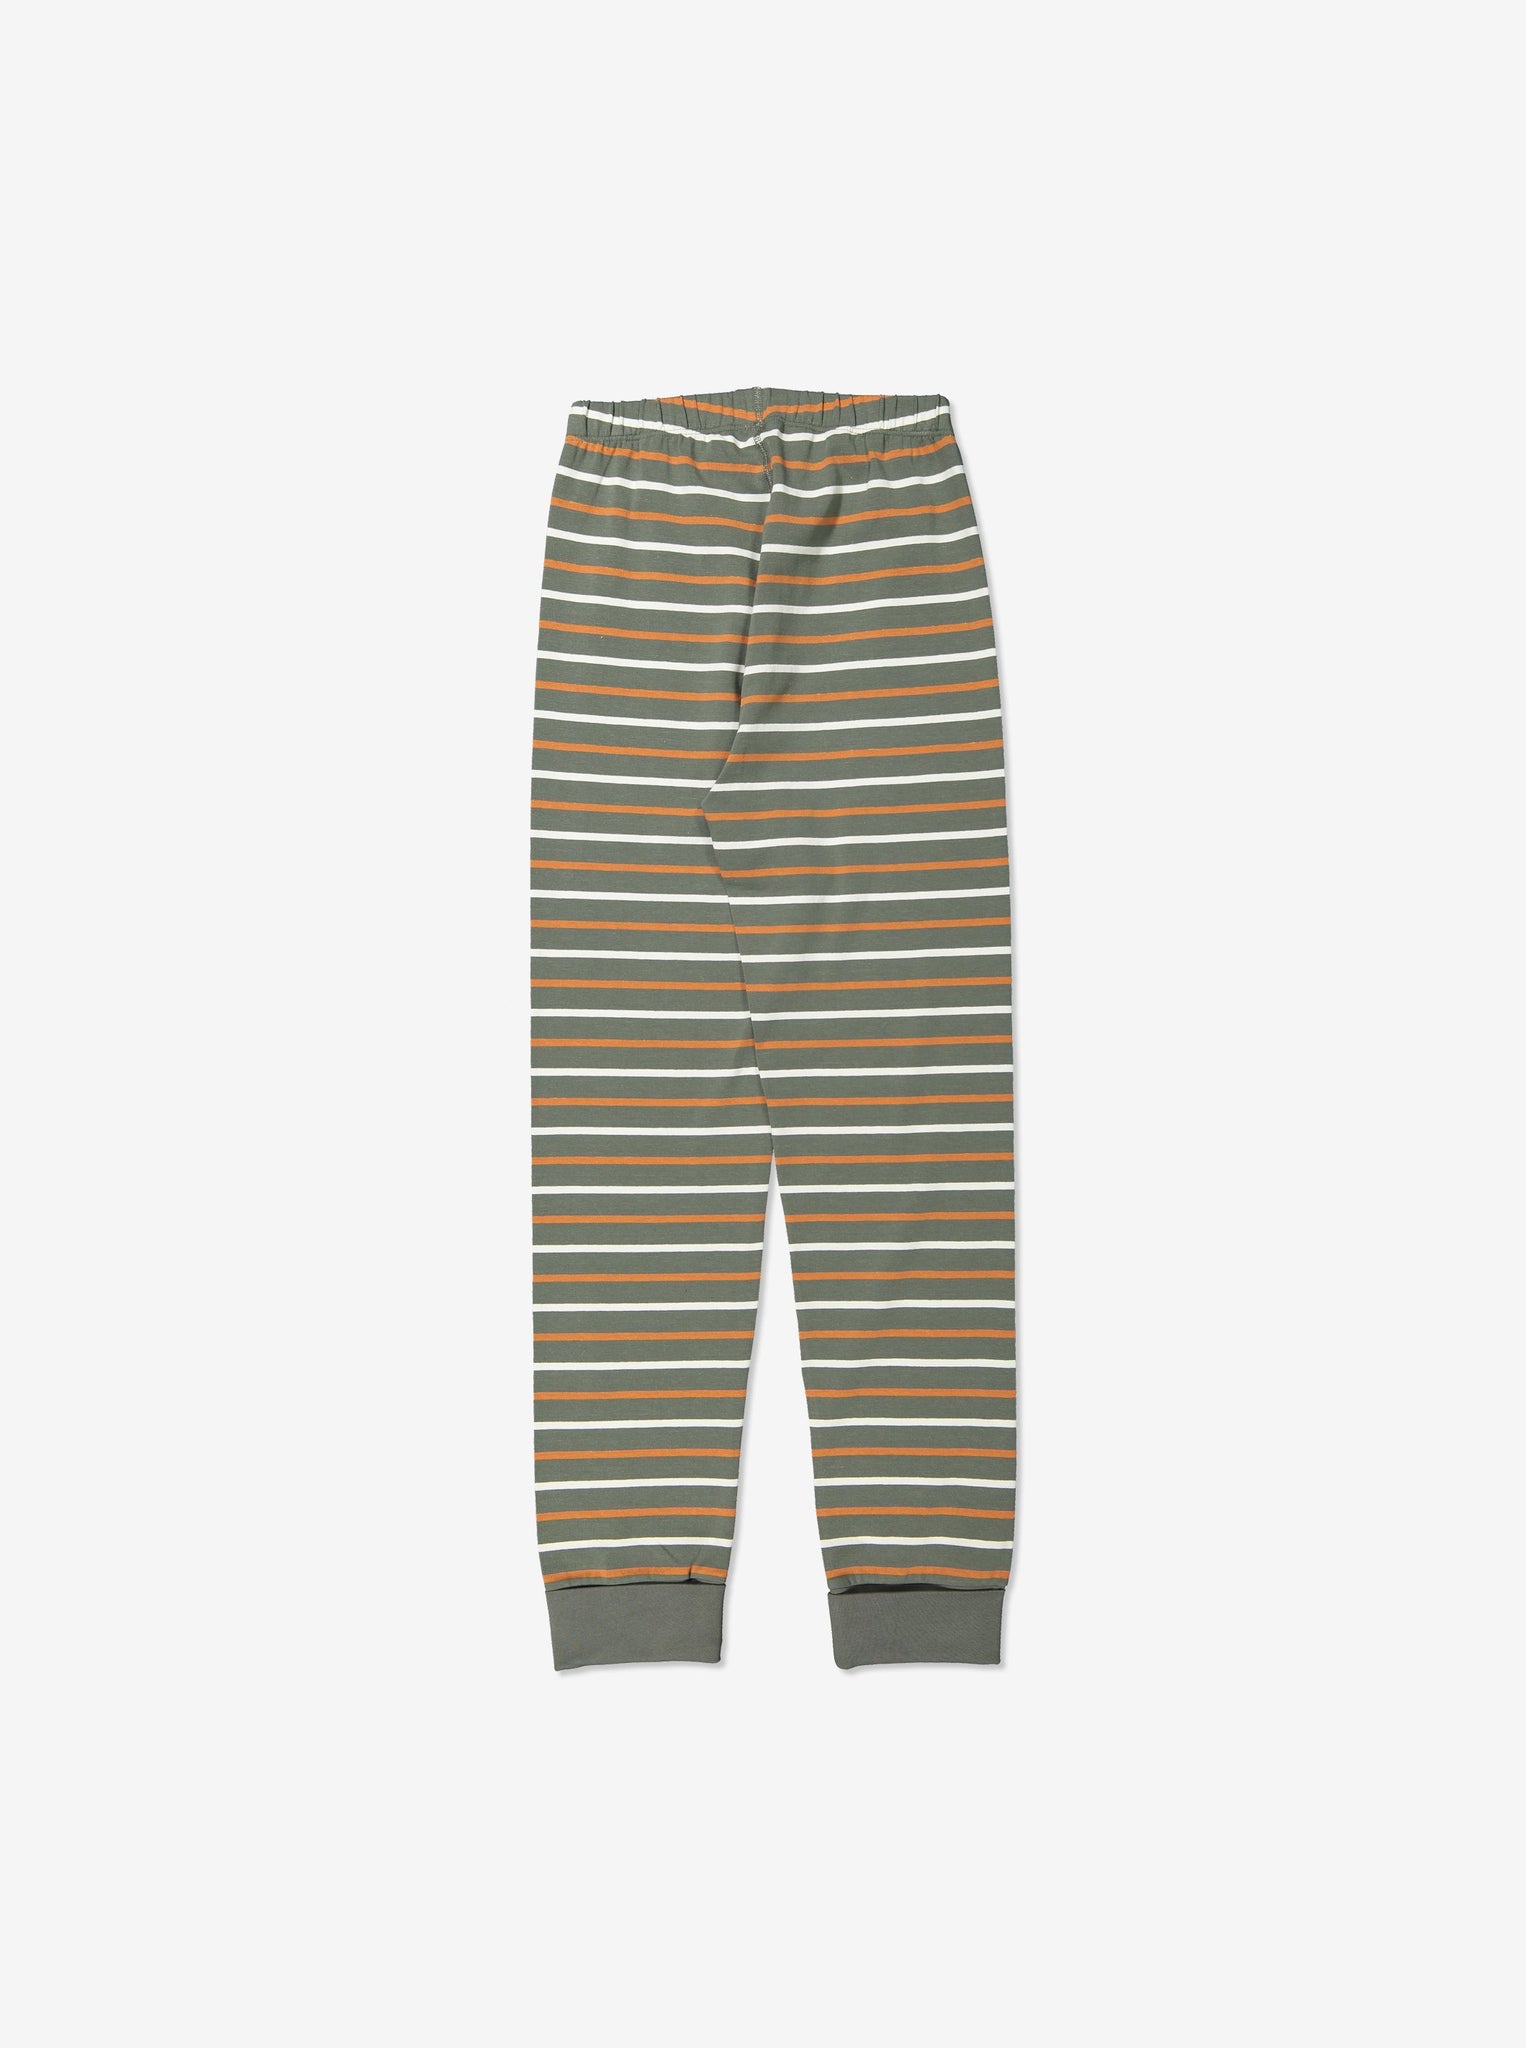 Organic Cozy Boys Pyjamas, Sustainable Kids Clothes| Polarn O. Pyret UK